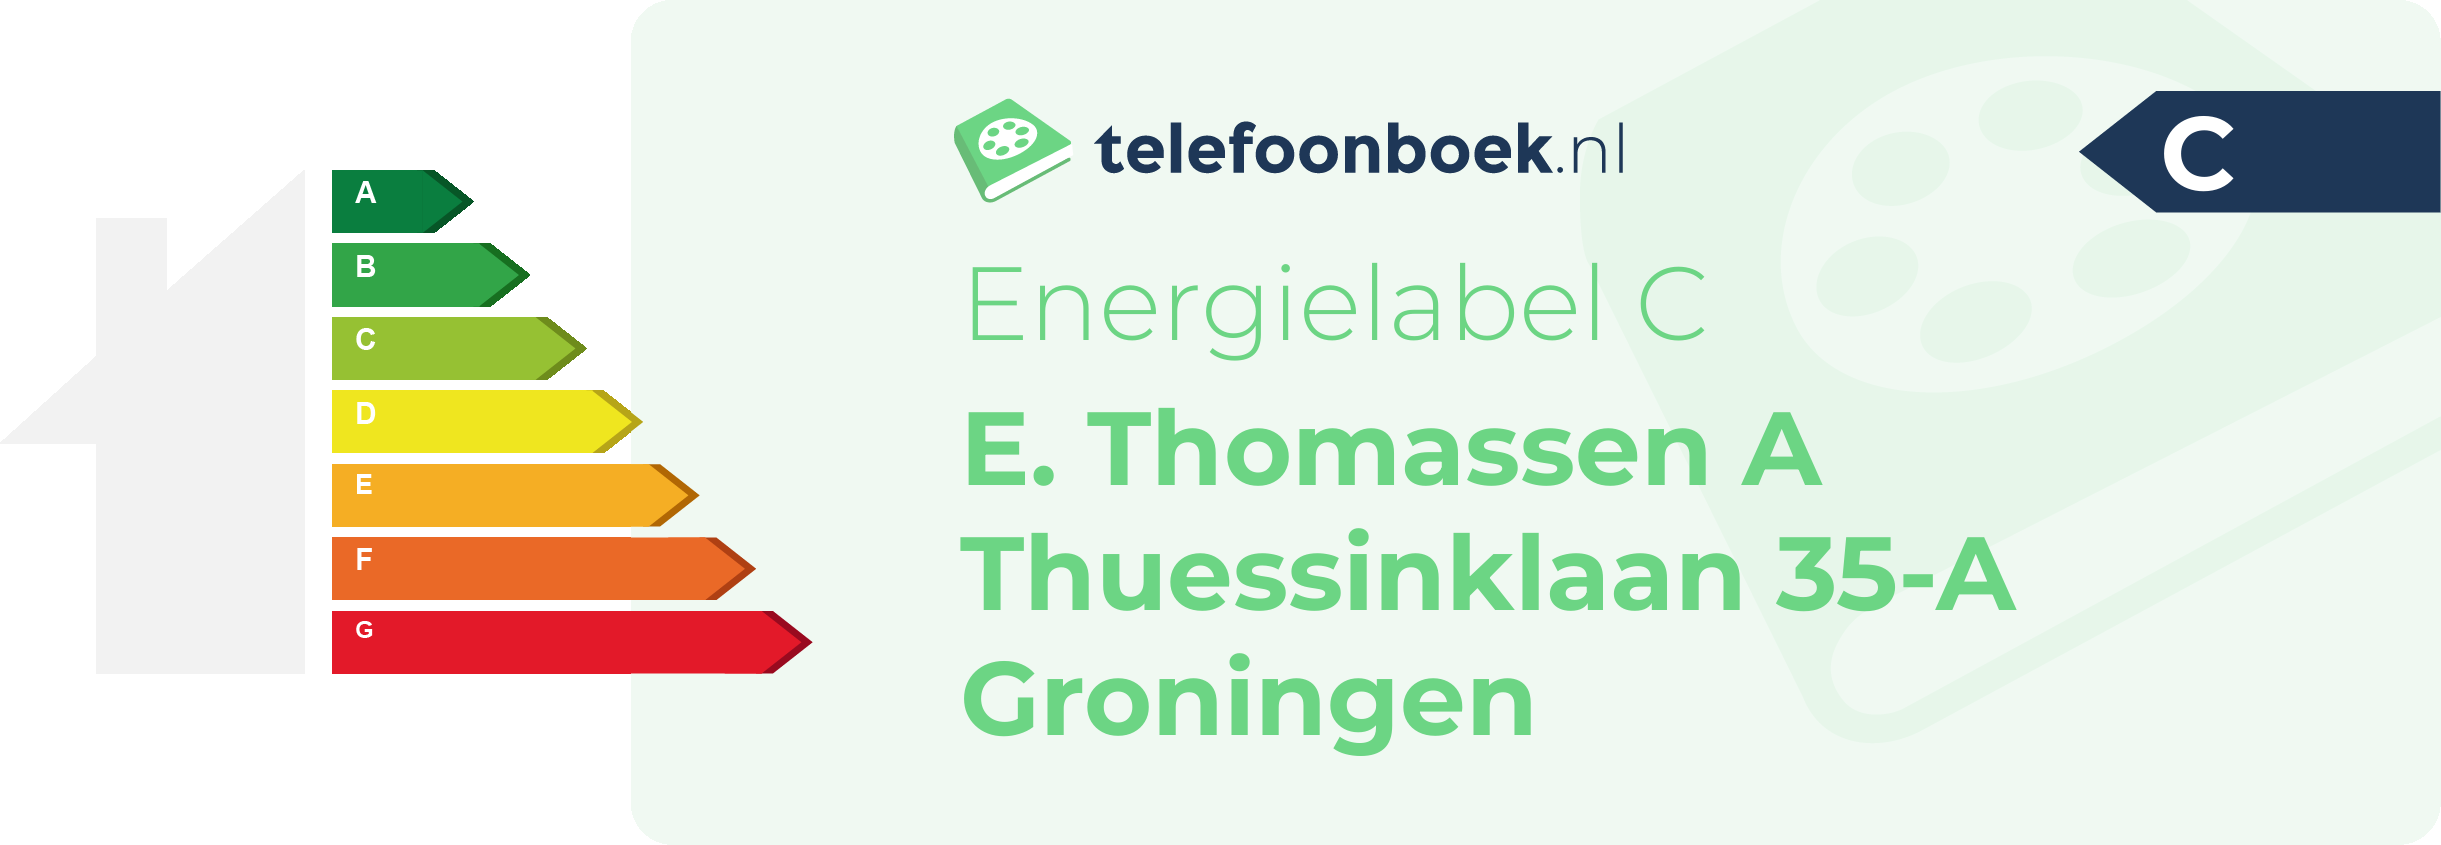 Energielabel E. Thomassen A Thuessinklaan 35-A Groningen